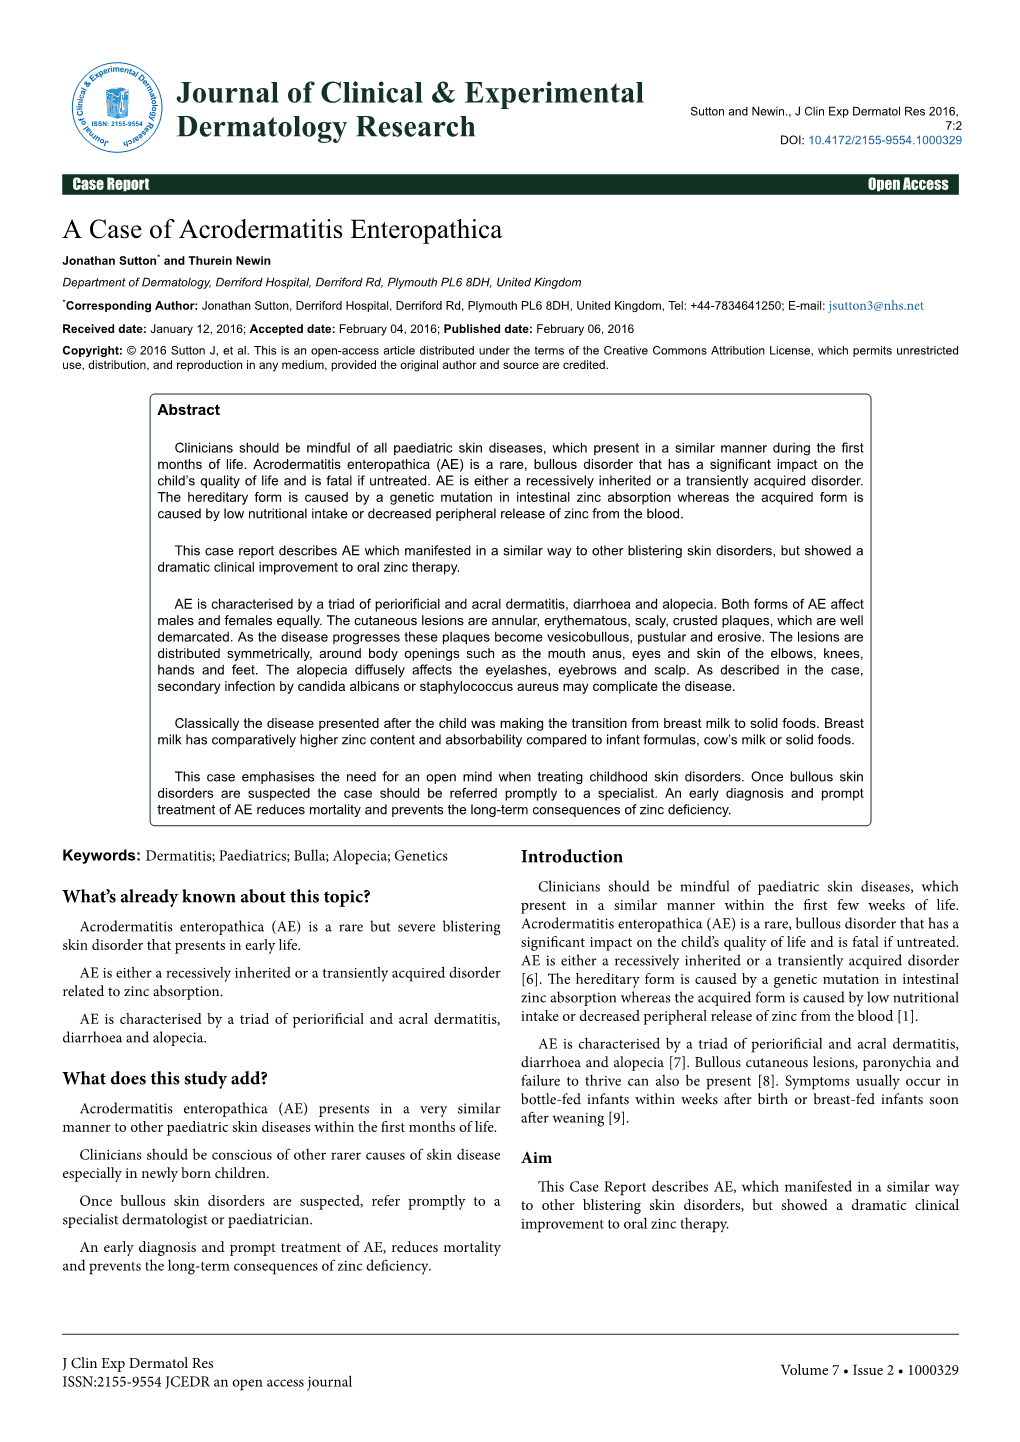 A Case of Acrodermatitis Enteropathica